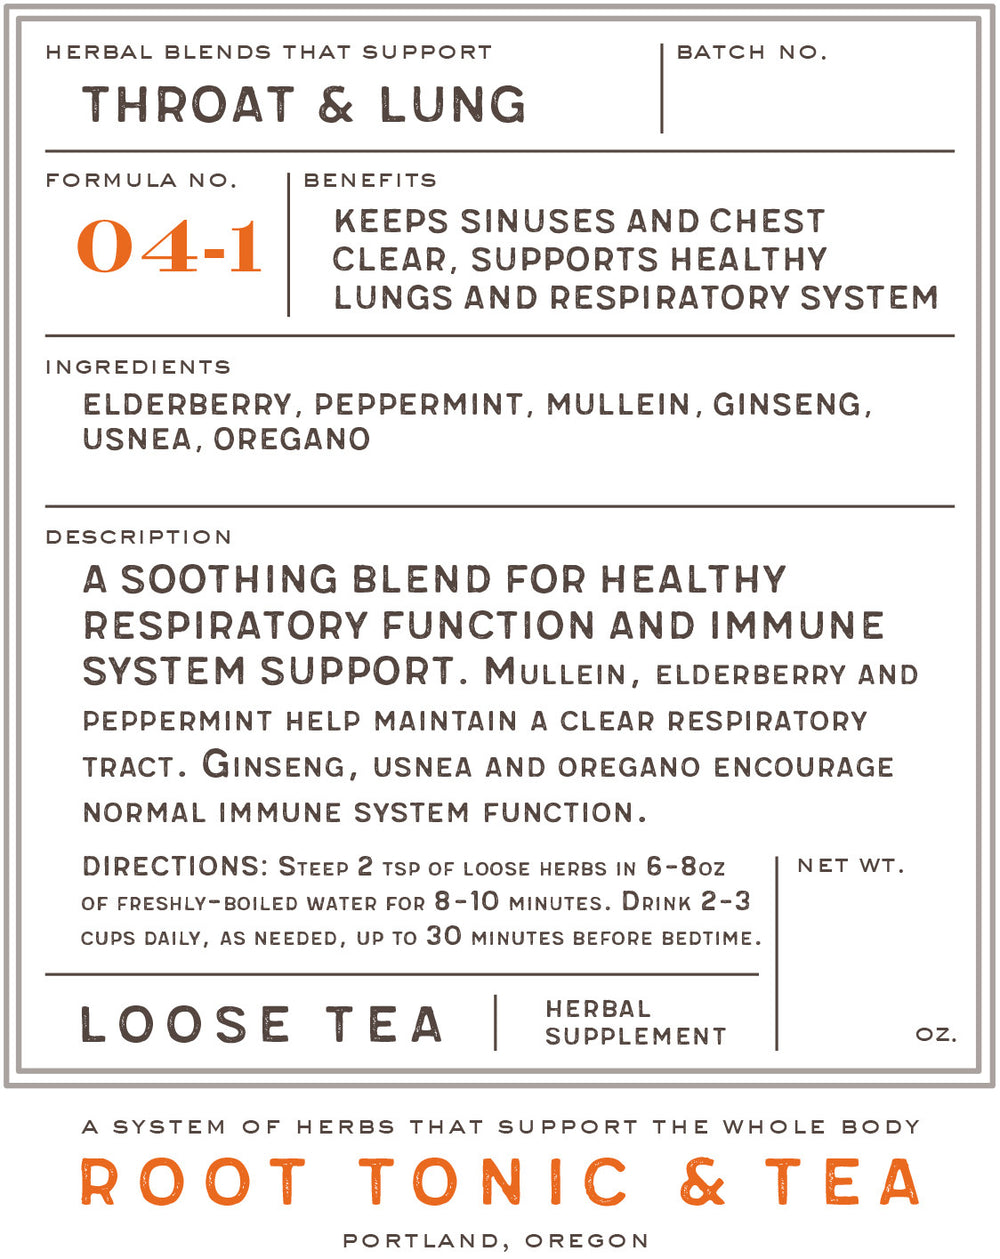 Formula No. 04-1 Throat & Lung